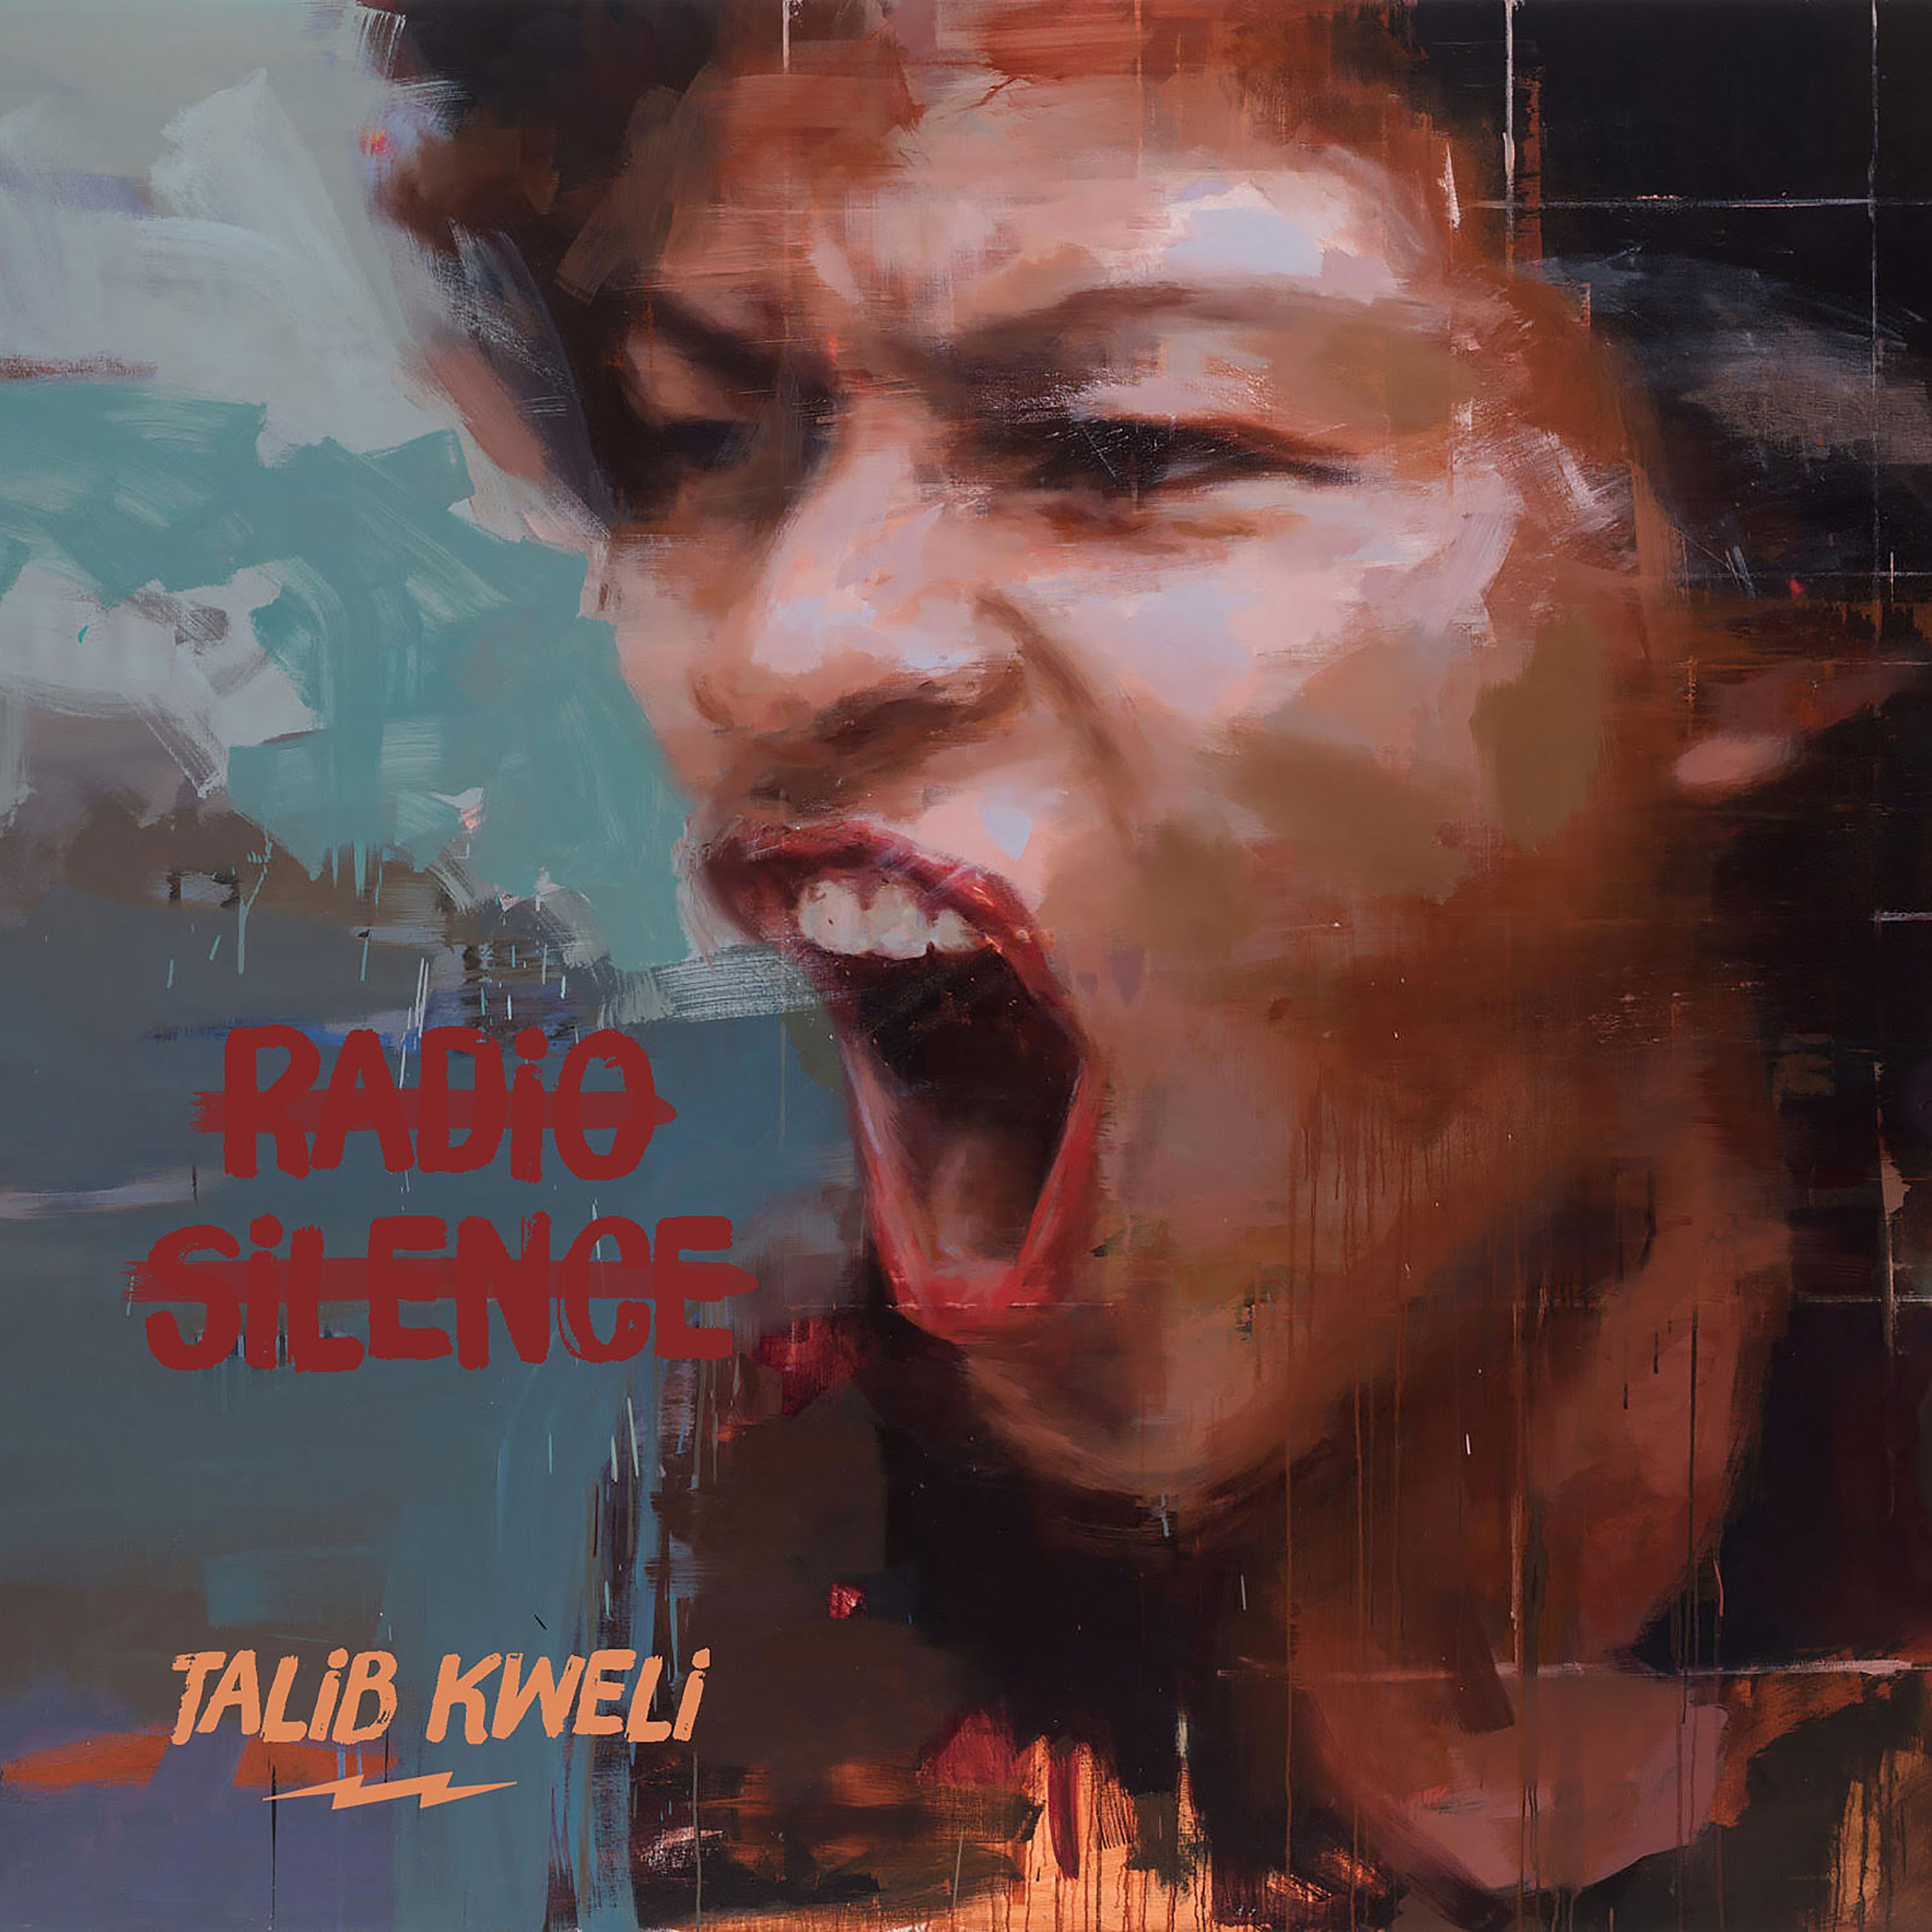 Album artwork for 'Radio Silence' by Talib Kweli. Photo by: Talib Kweli